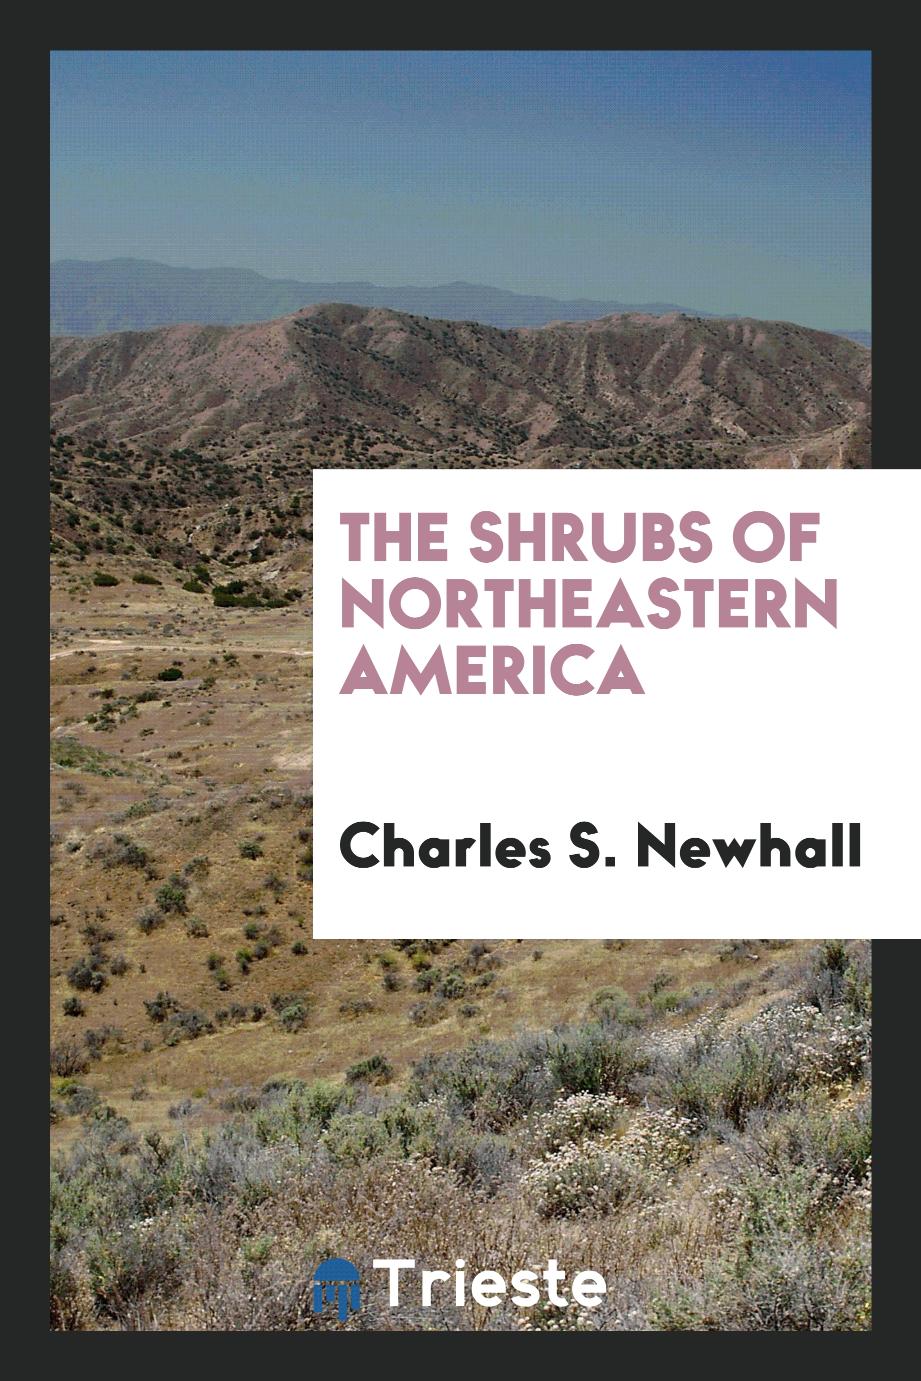 The shrubs of northeastern America